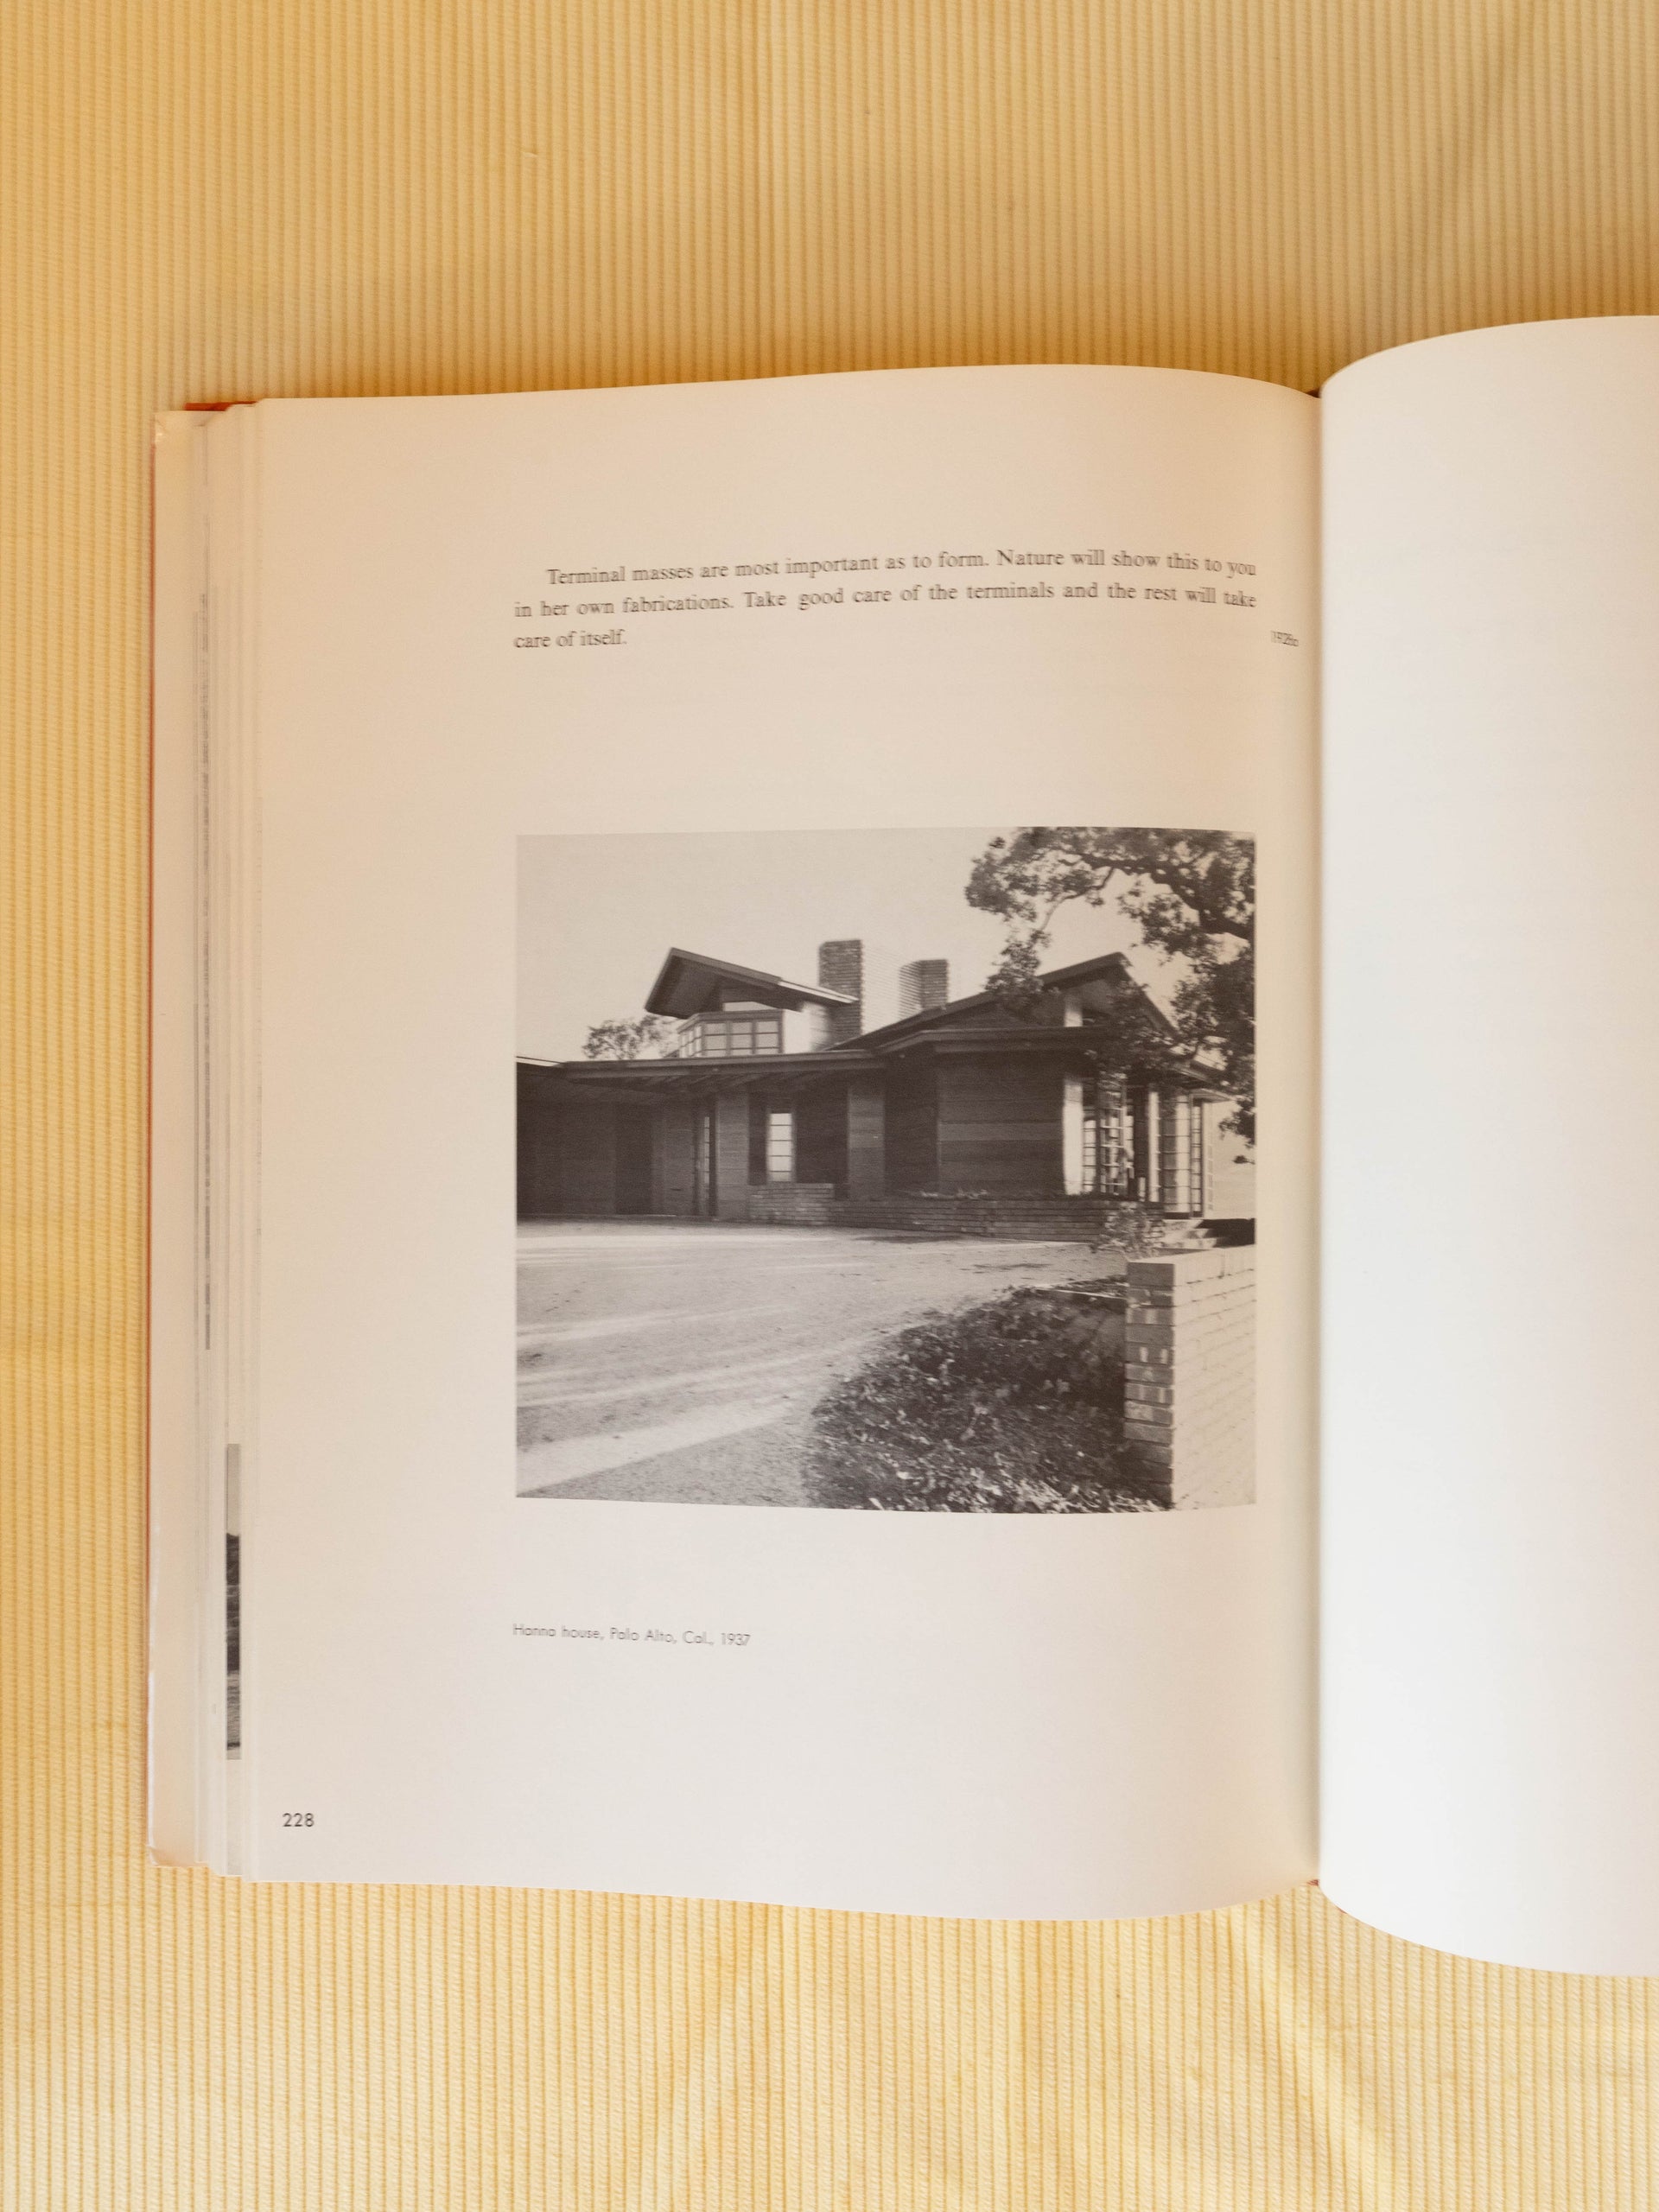 Frank Lloyd Wright, An American Architecture